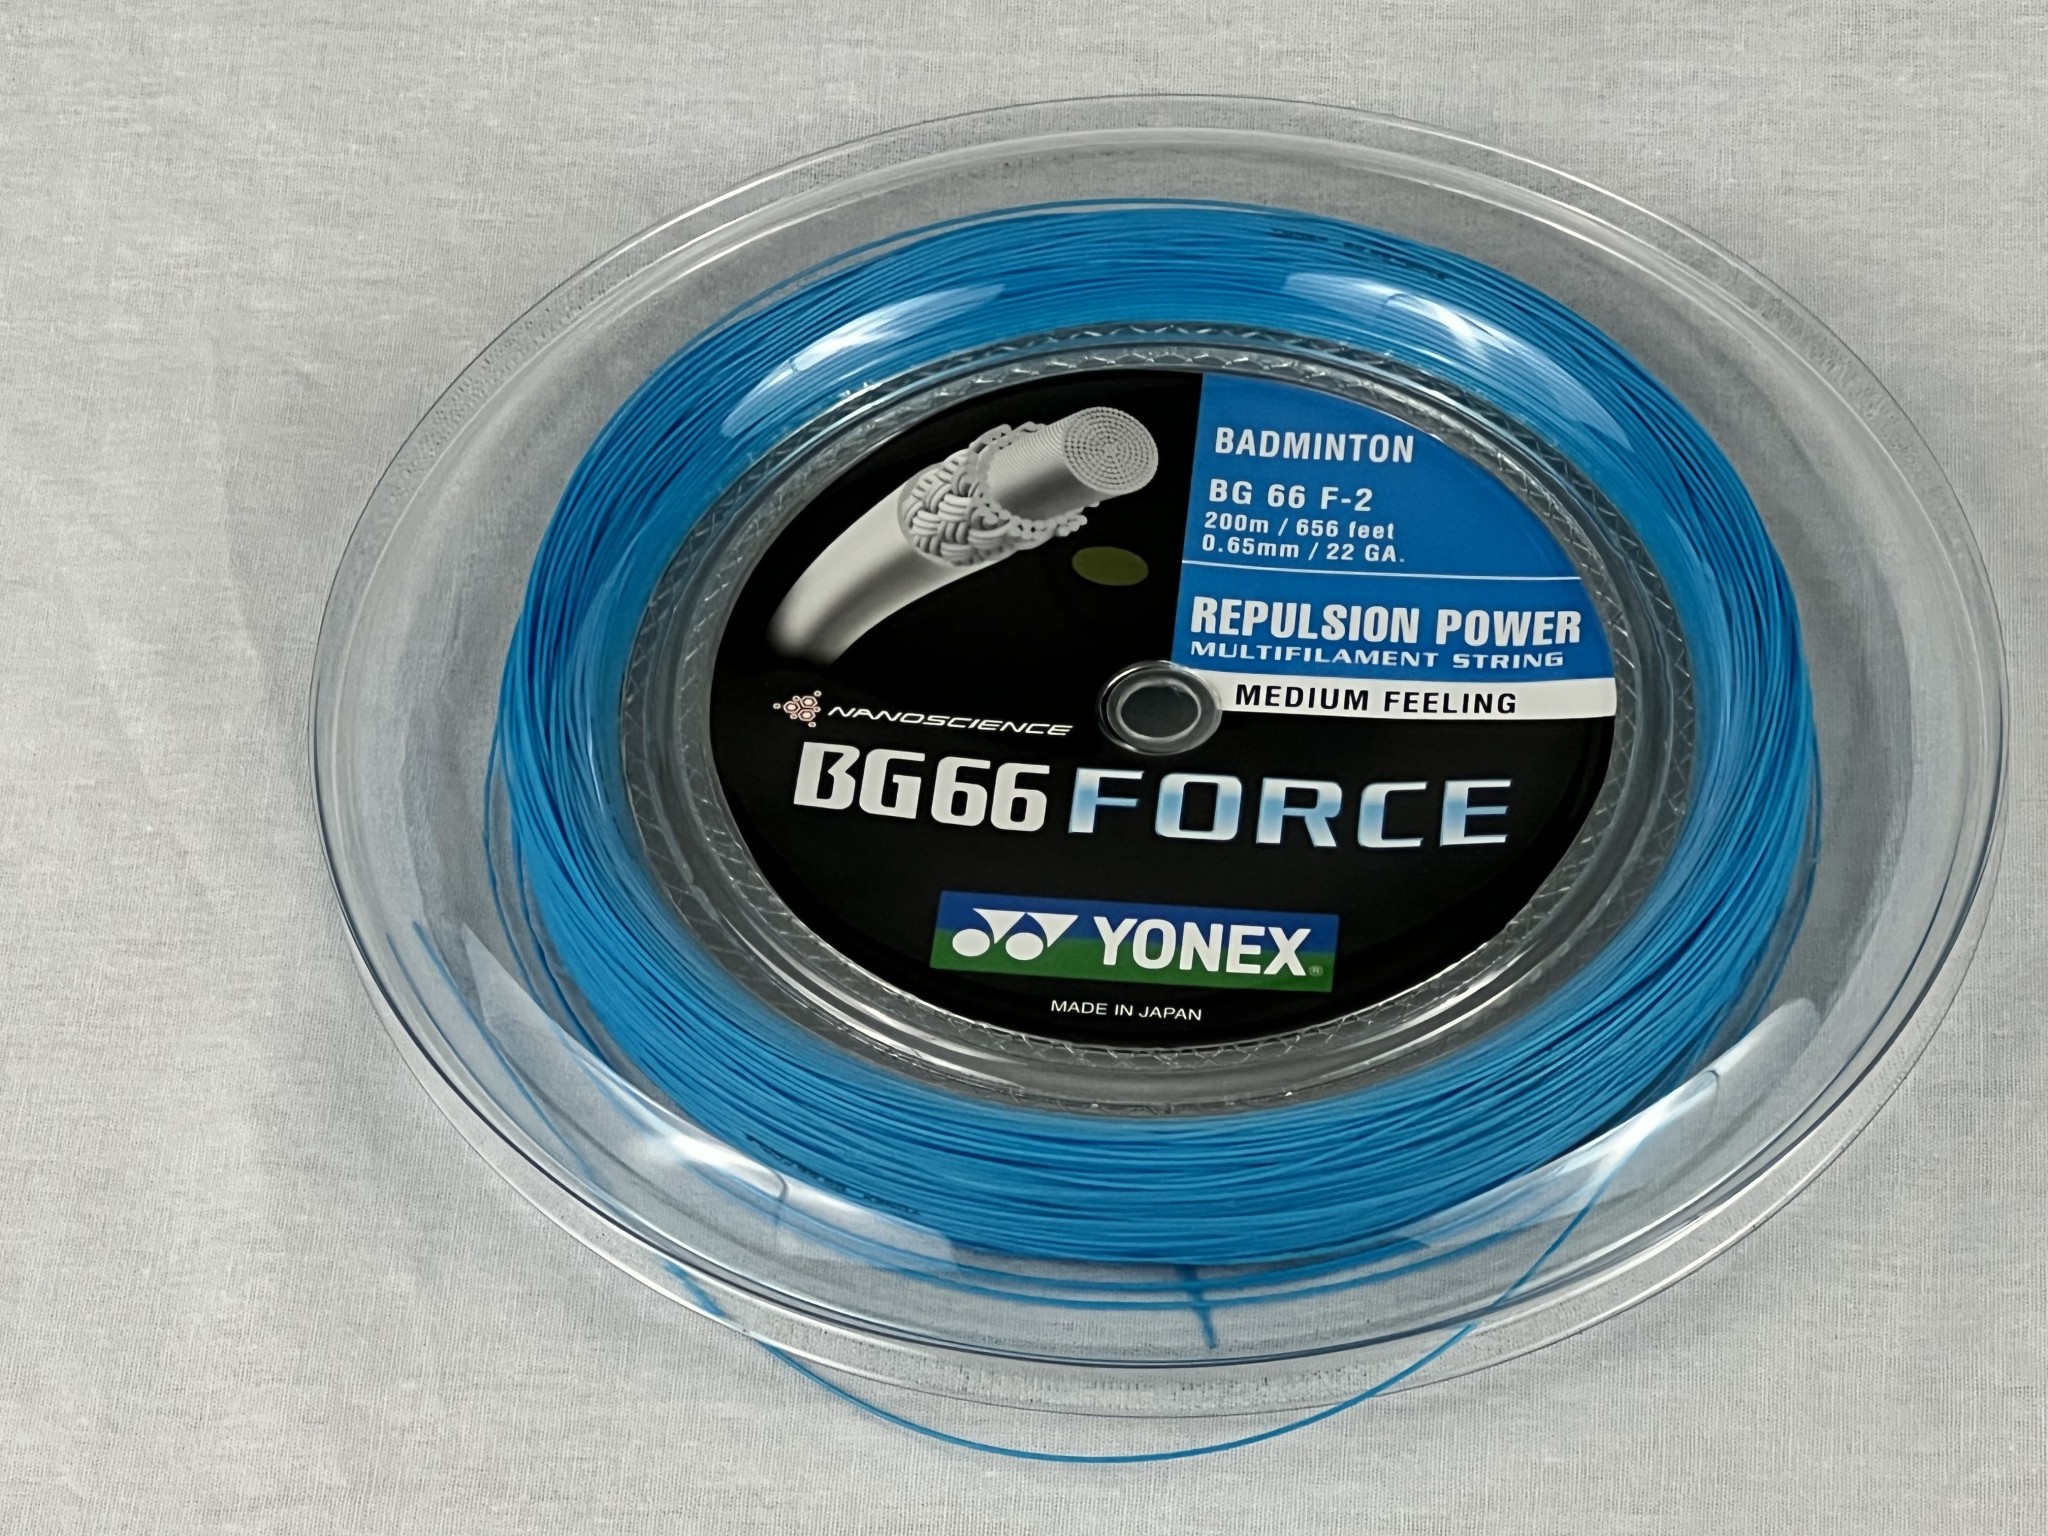 Yonex BG66 Force Badminton String Reel 200m /656 feet - Cayman